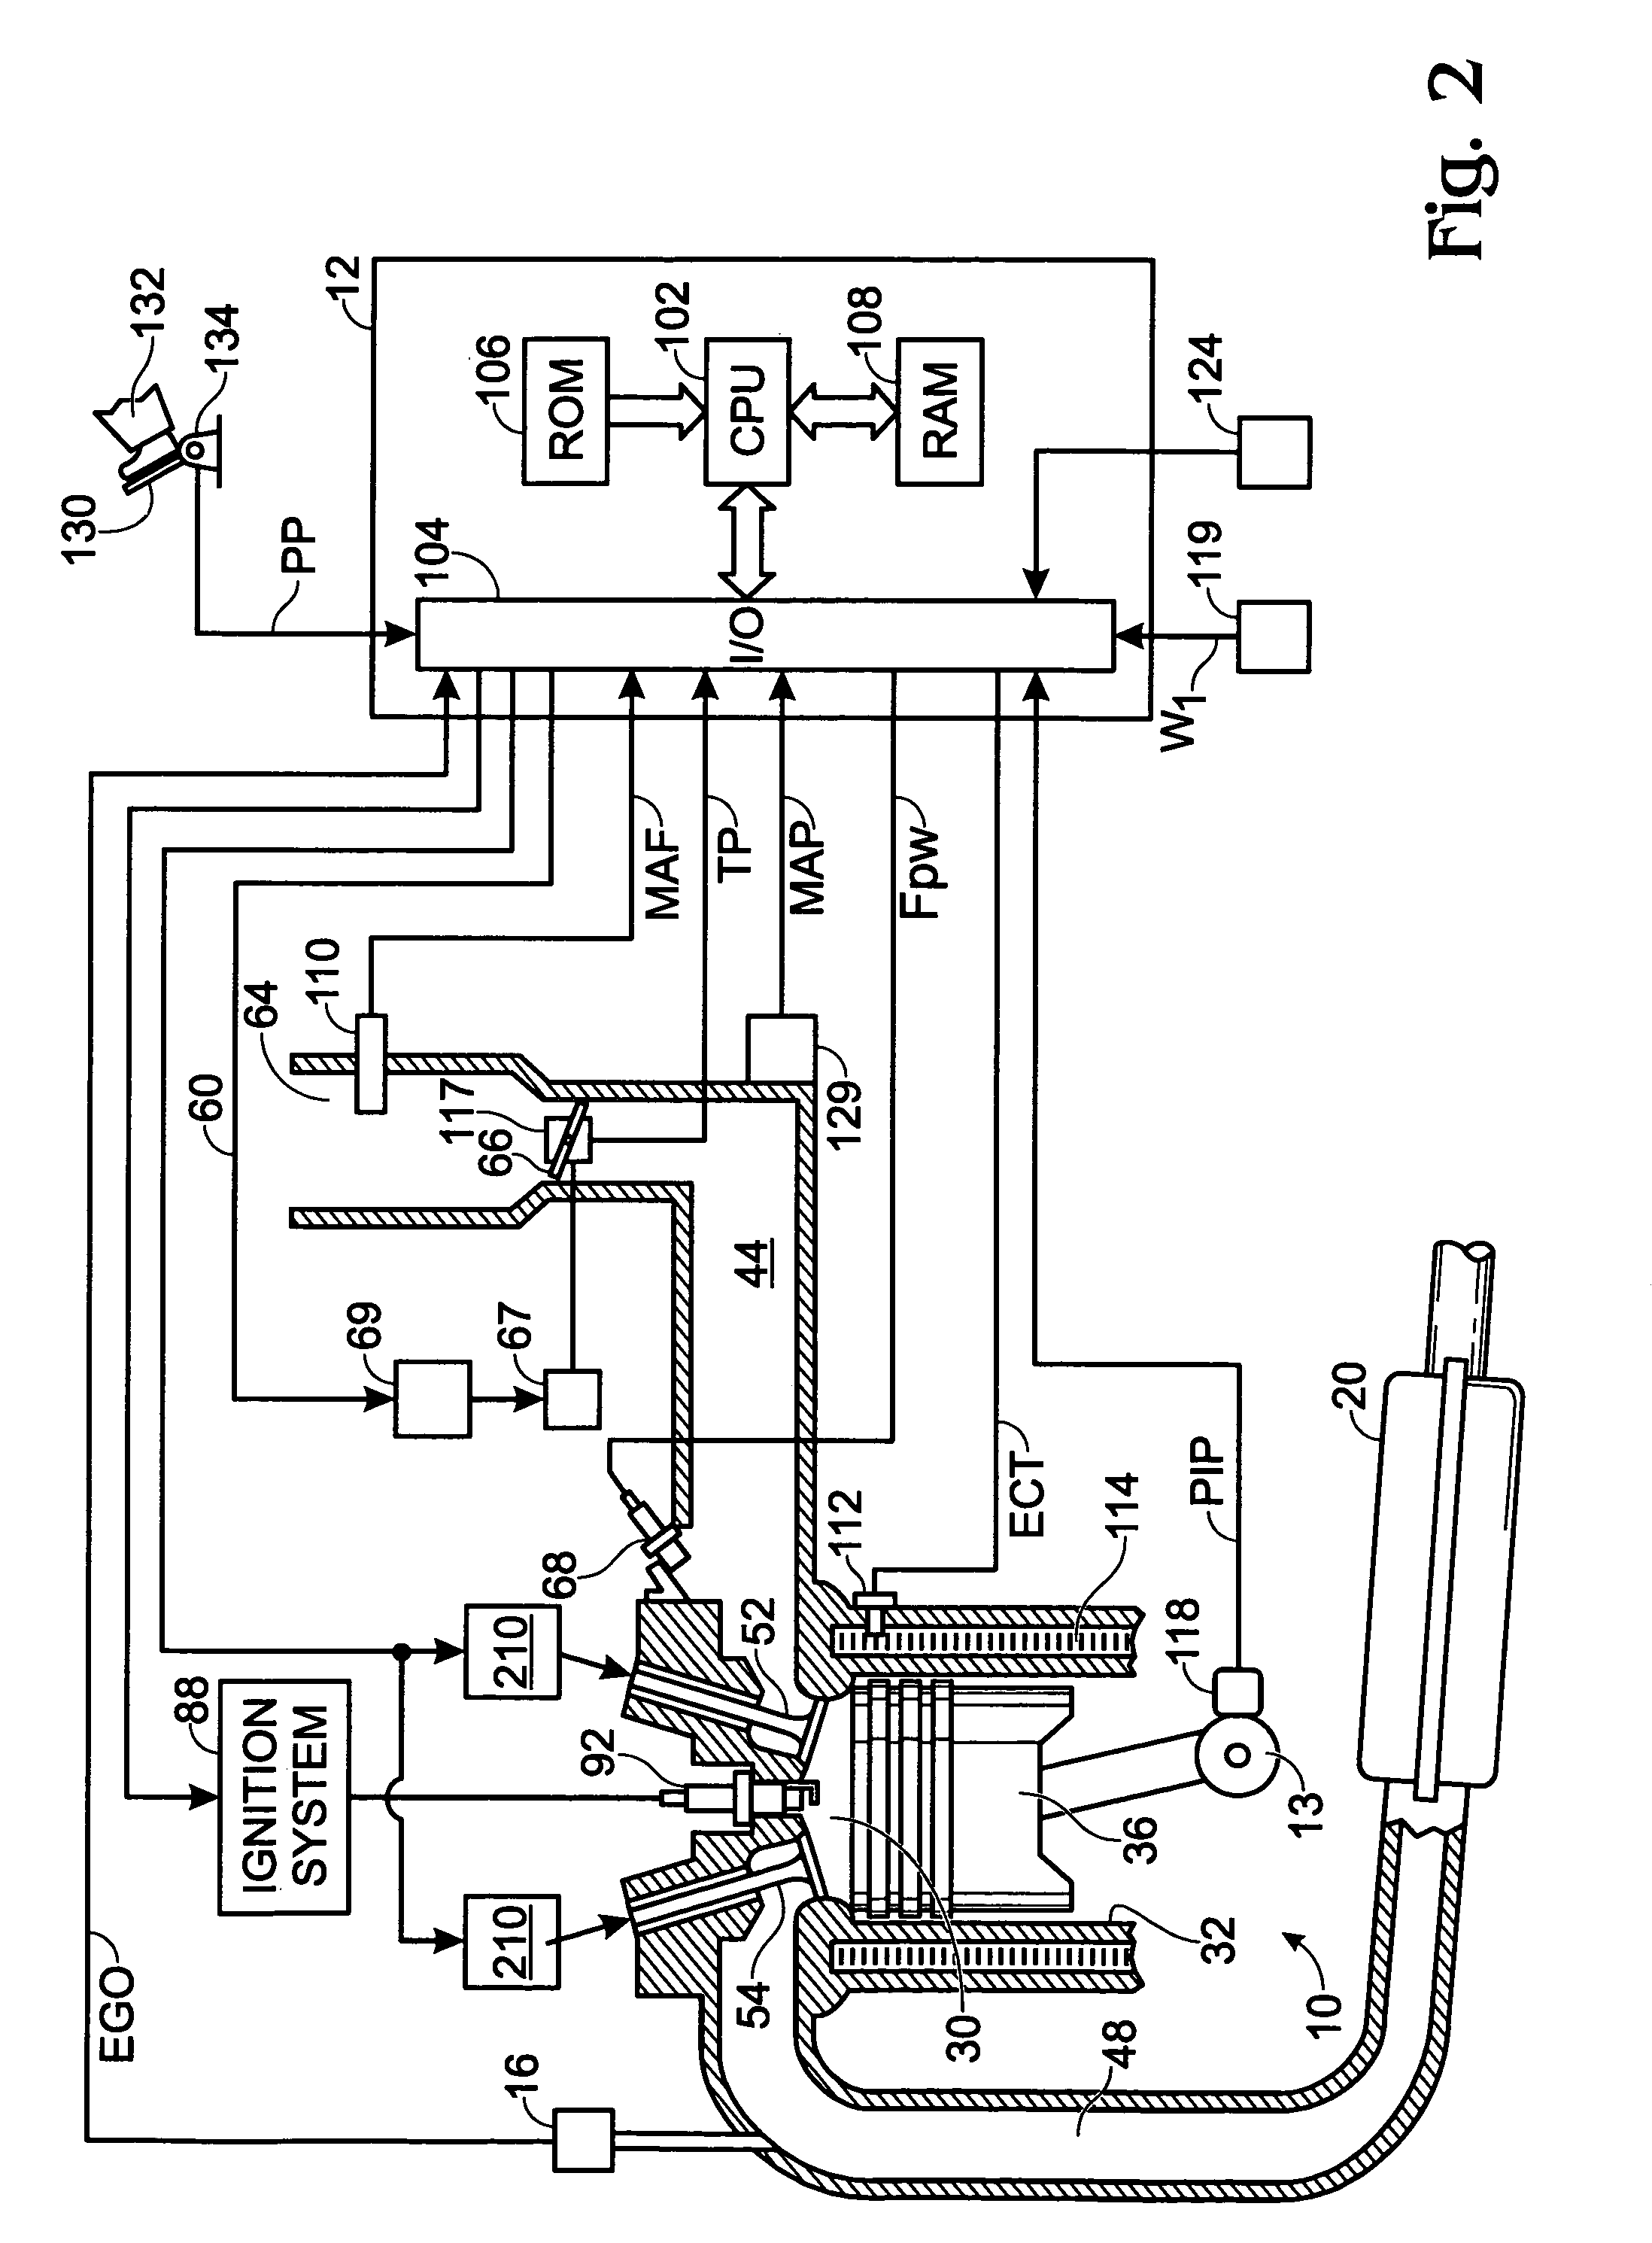 Bi-directional power electronics circuit for electromechanical valve actuator of an internal combustion engine